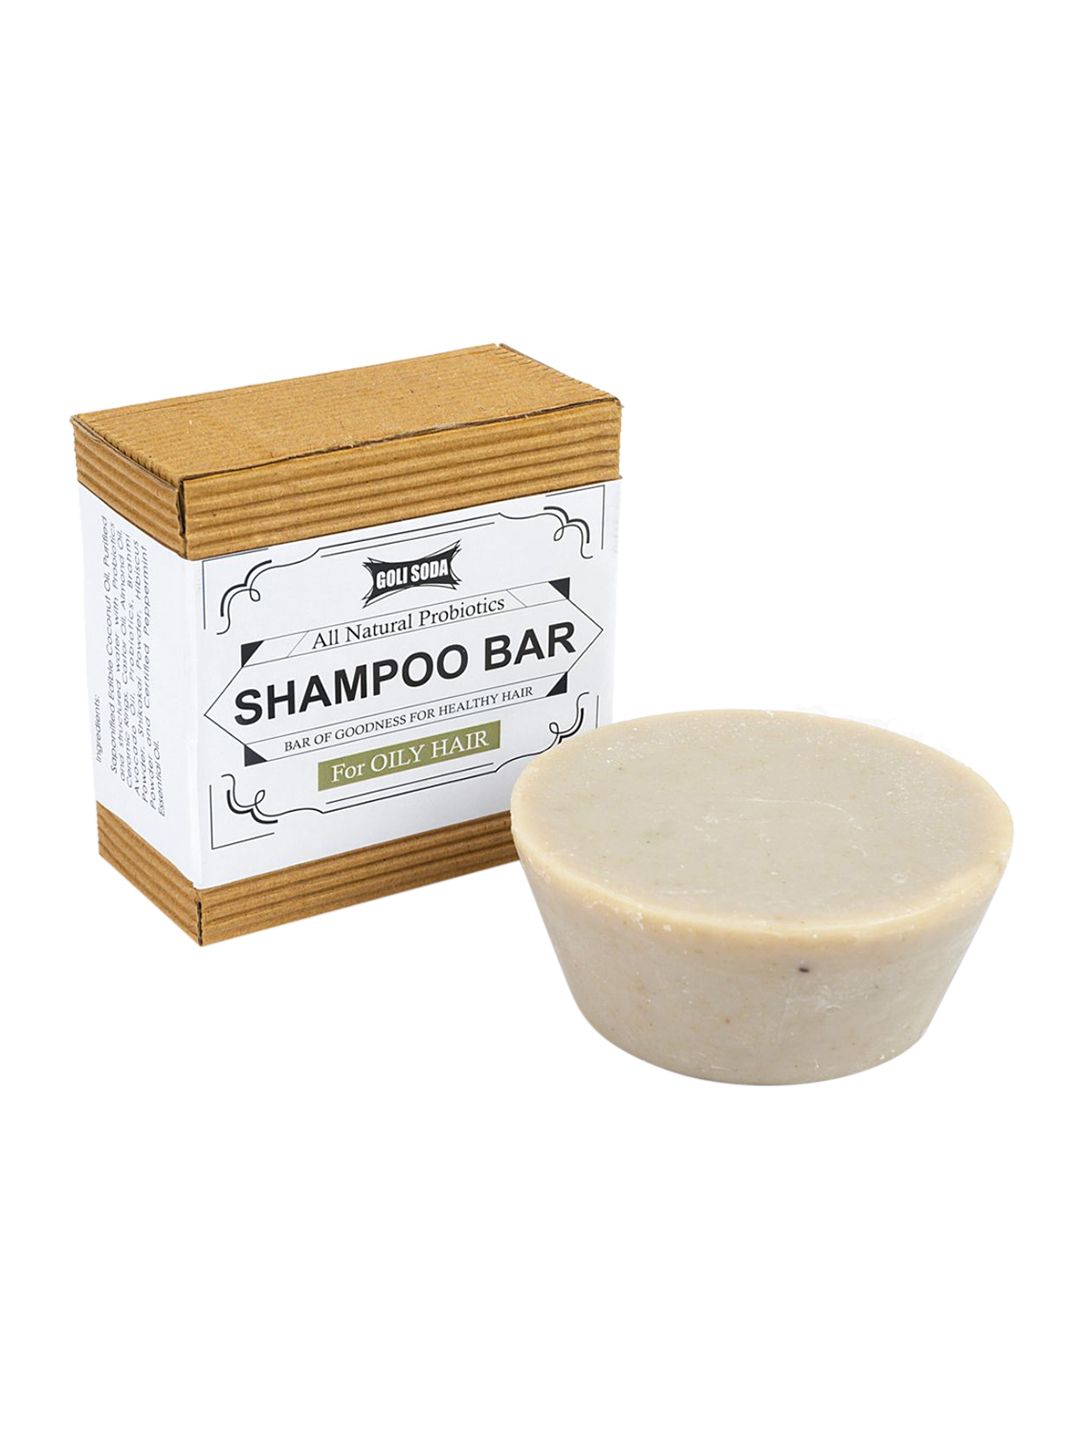 GOLI SODA All Natural Probiotics Shampoo Bar for Oily Hair - 90 g Price in India